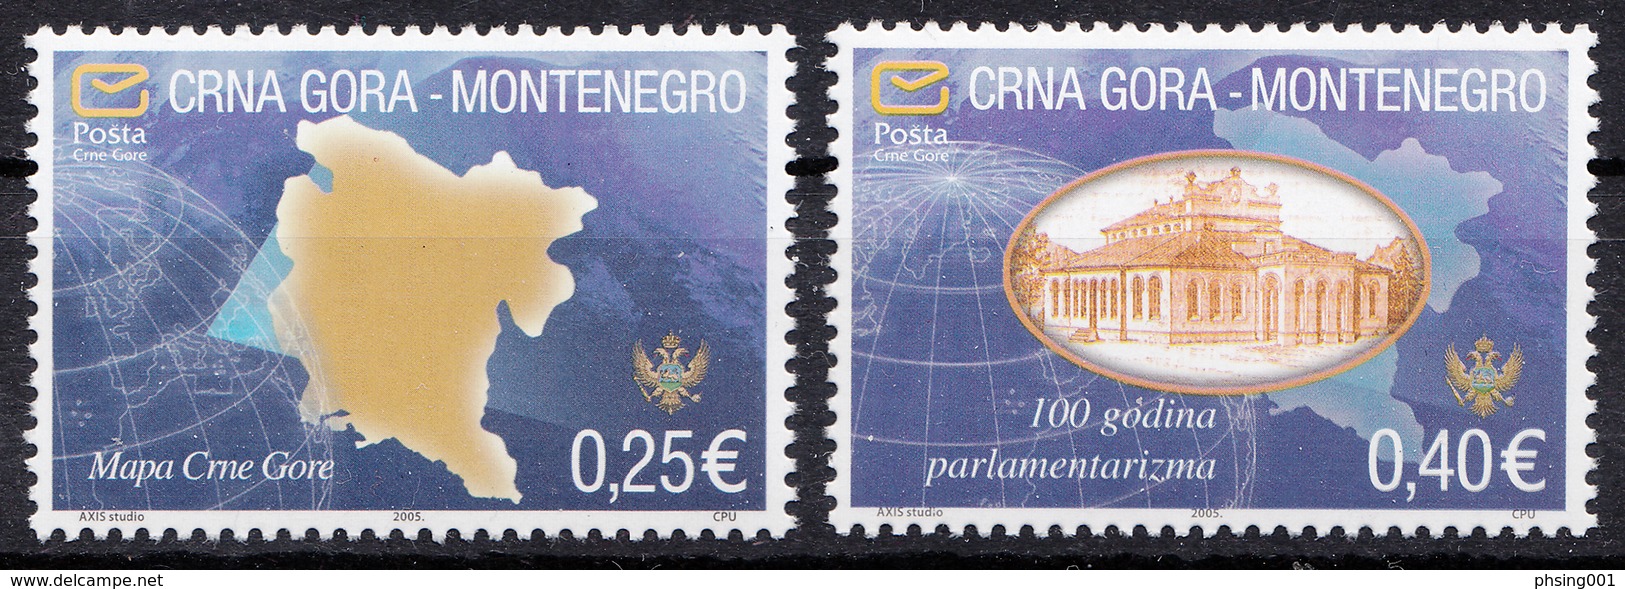 Montenegro 2005, Definitive Set SECOND PRINT MNH - Montenegro